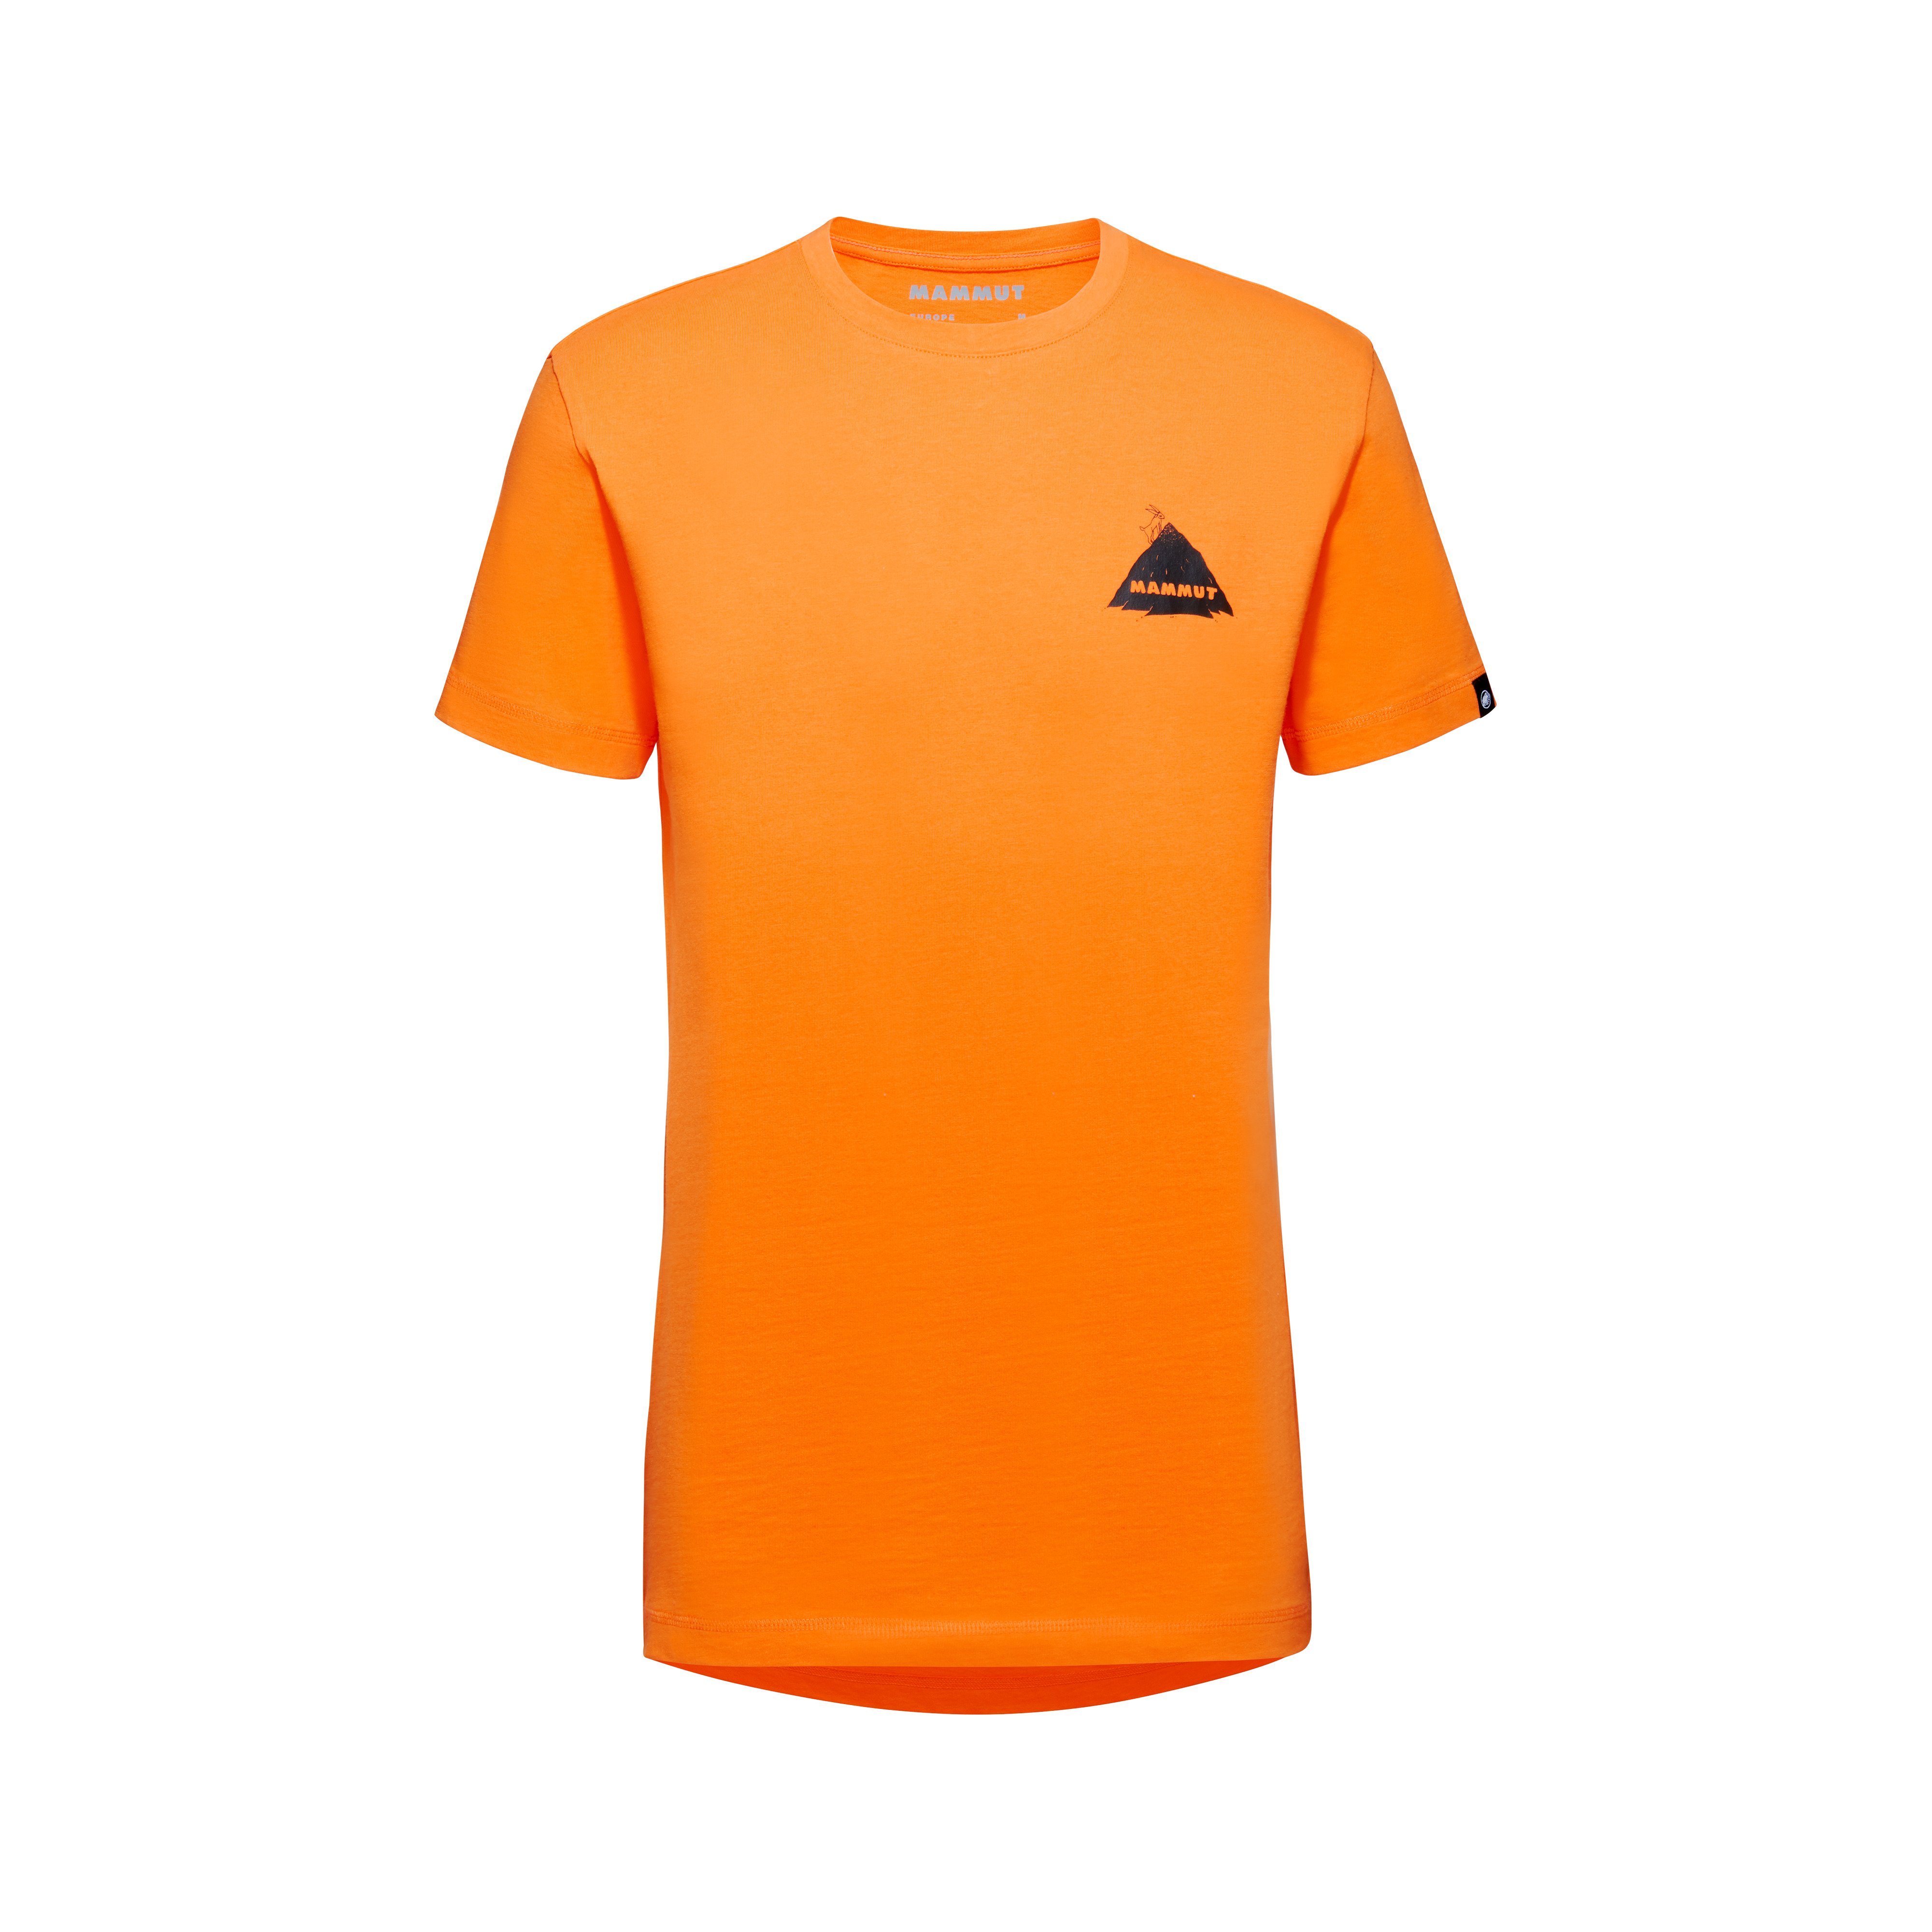 Massone T-Shirt Men Crag - dark tangerine, M product image